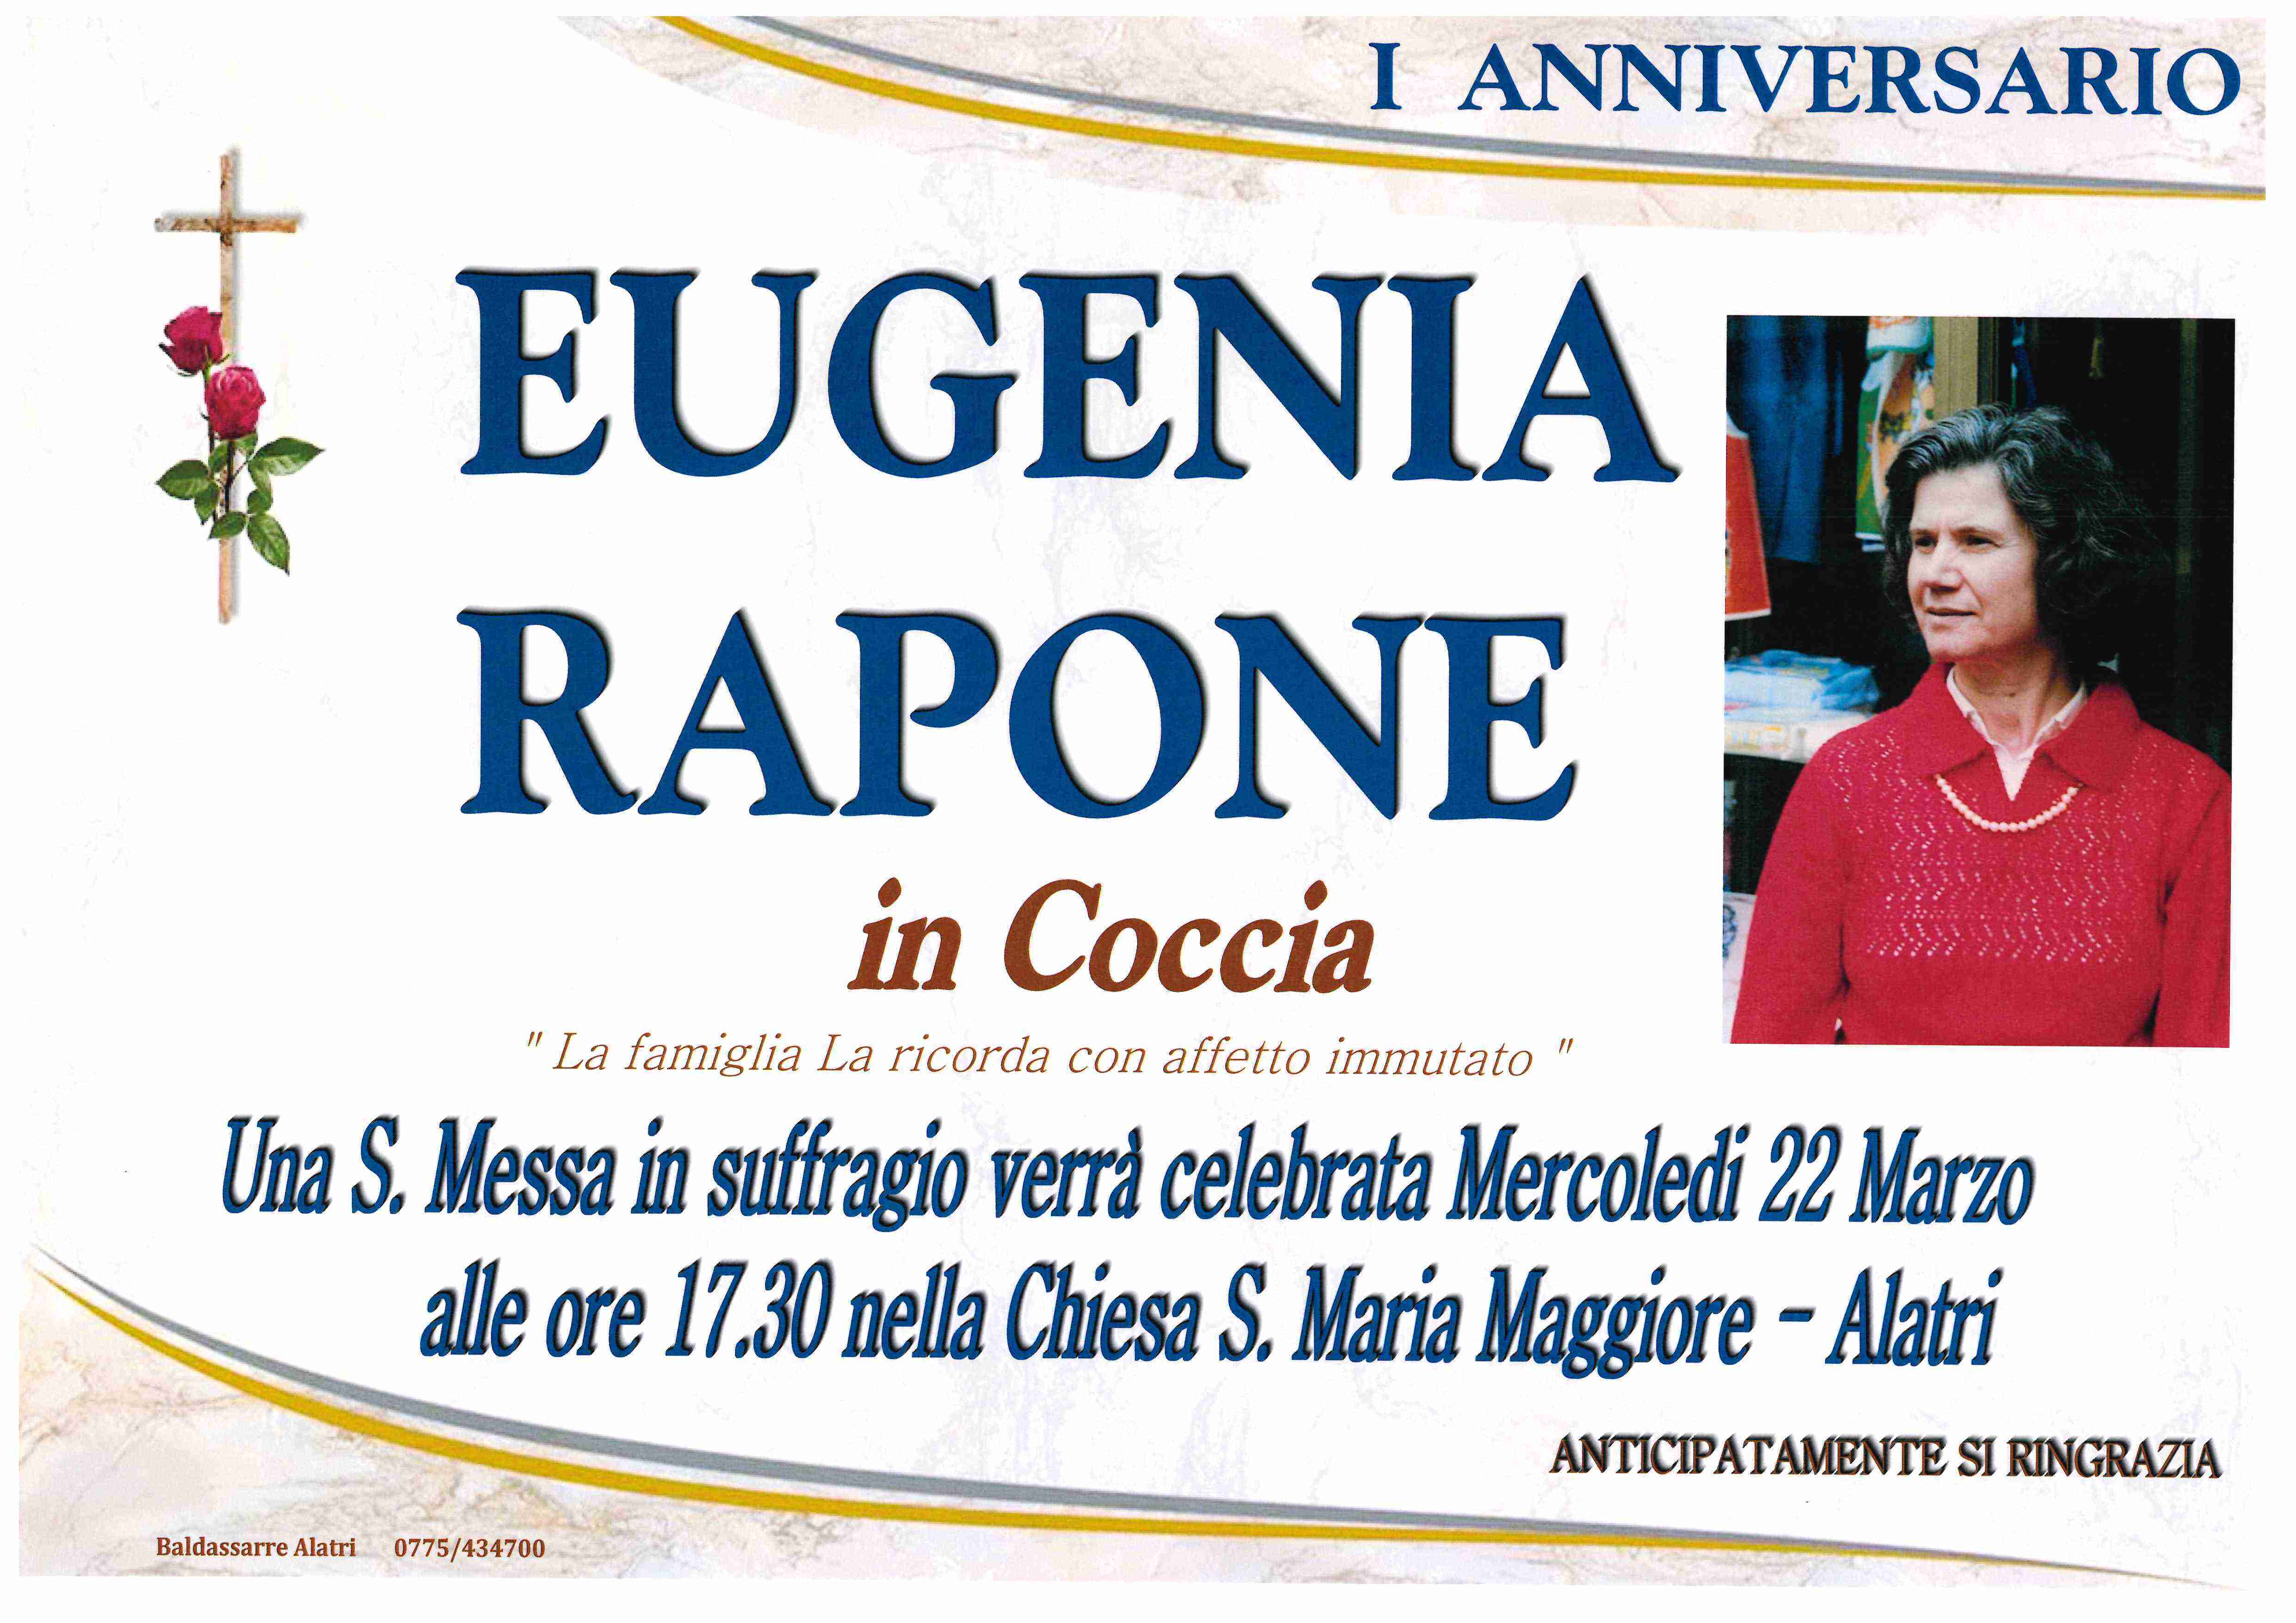 Eugenia Rapone